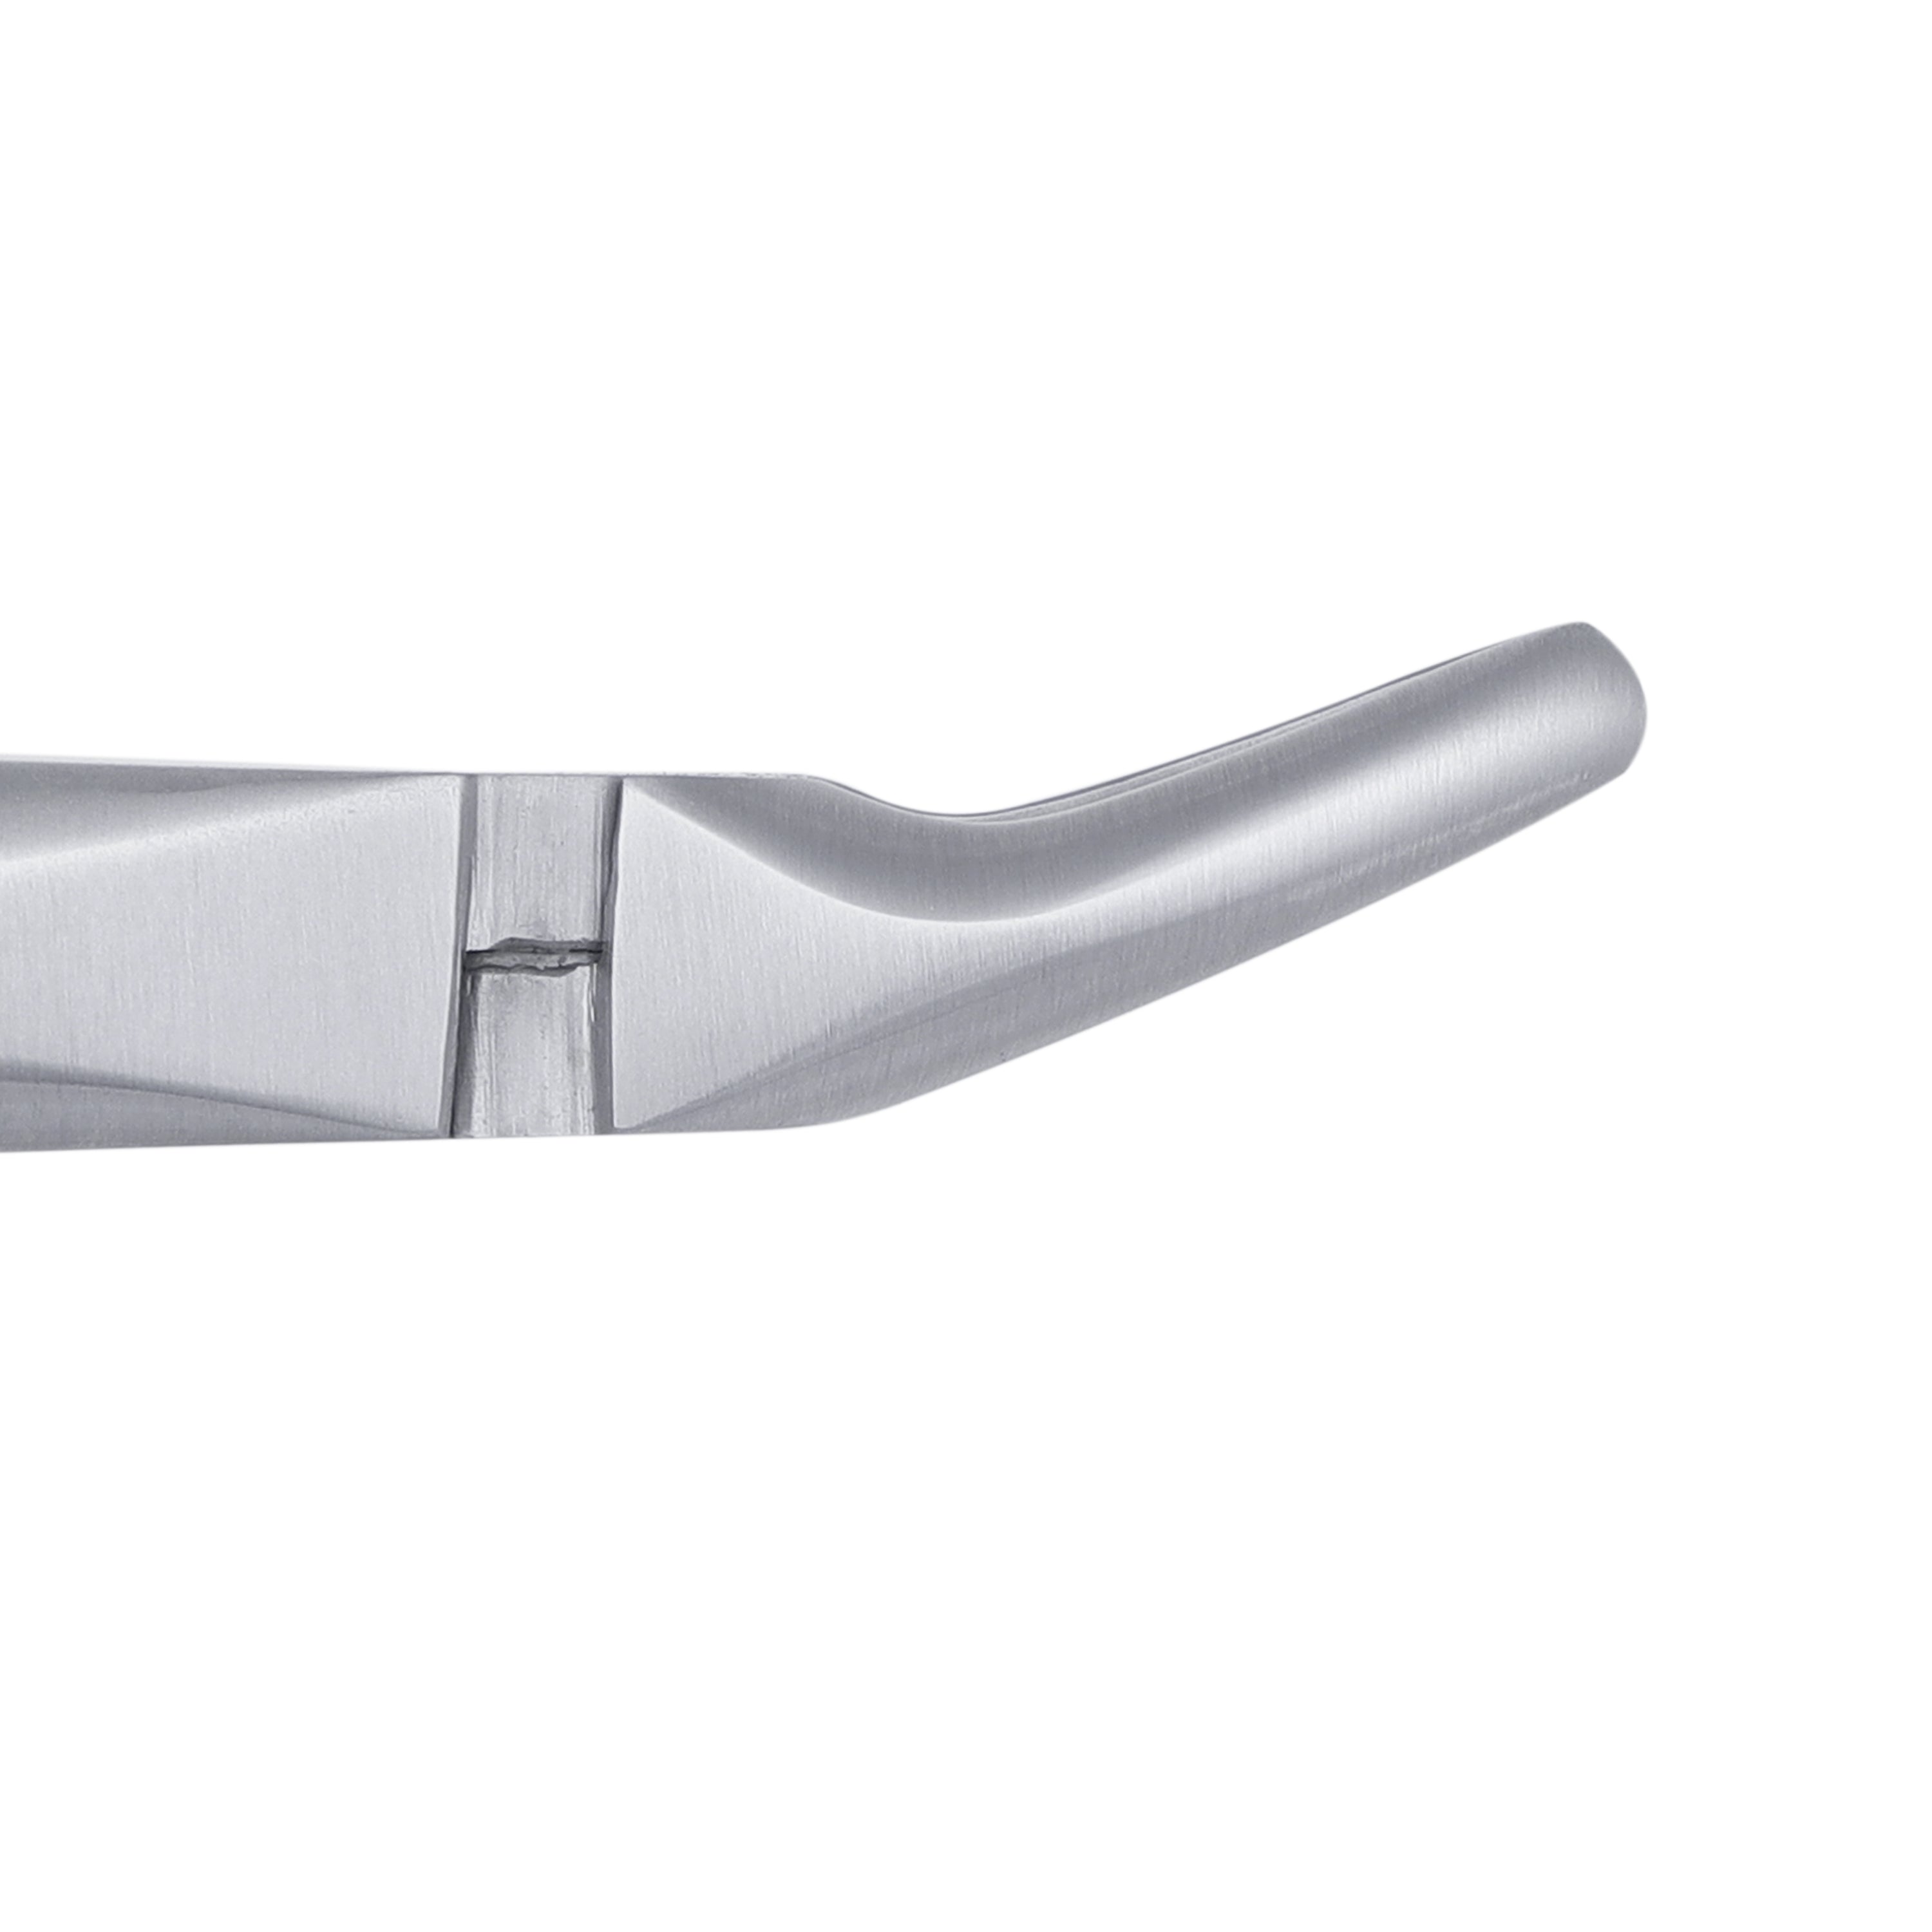 6C Pedo Upper Molars English Extraction Forcep - HiTeck Medical Instruments